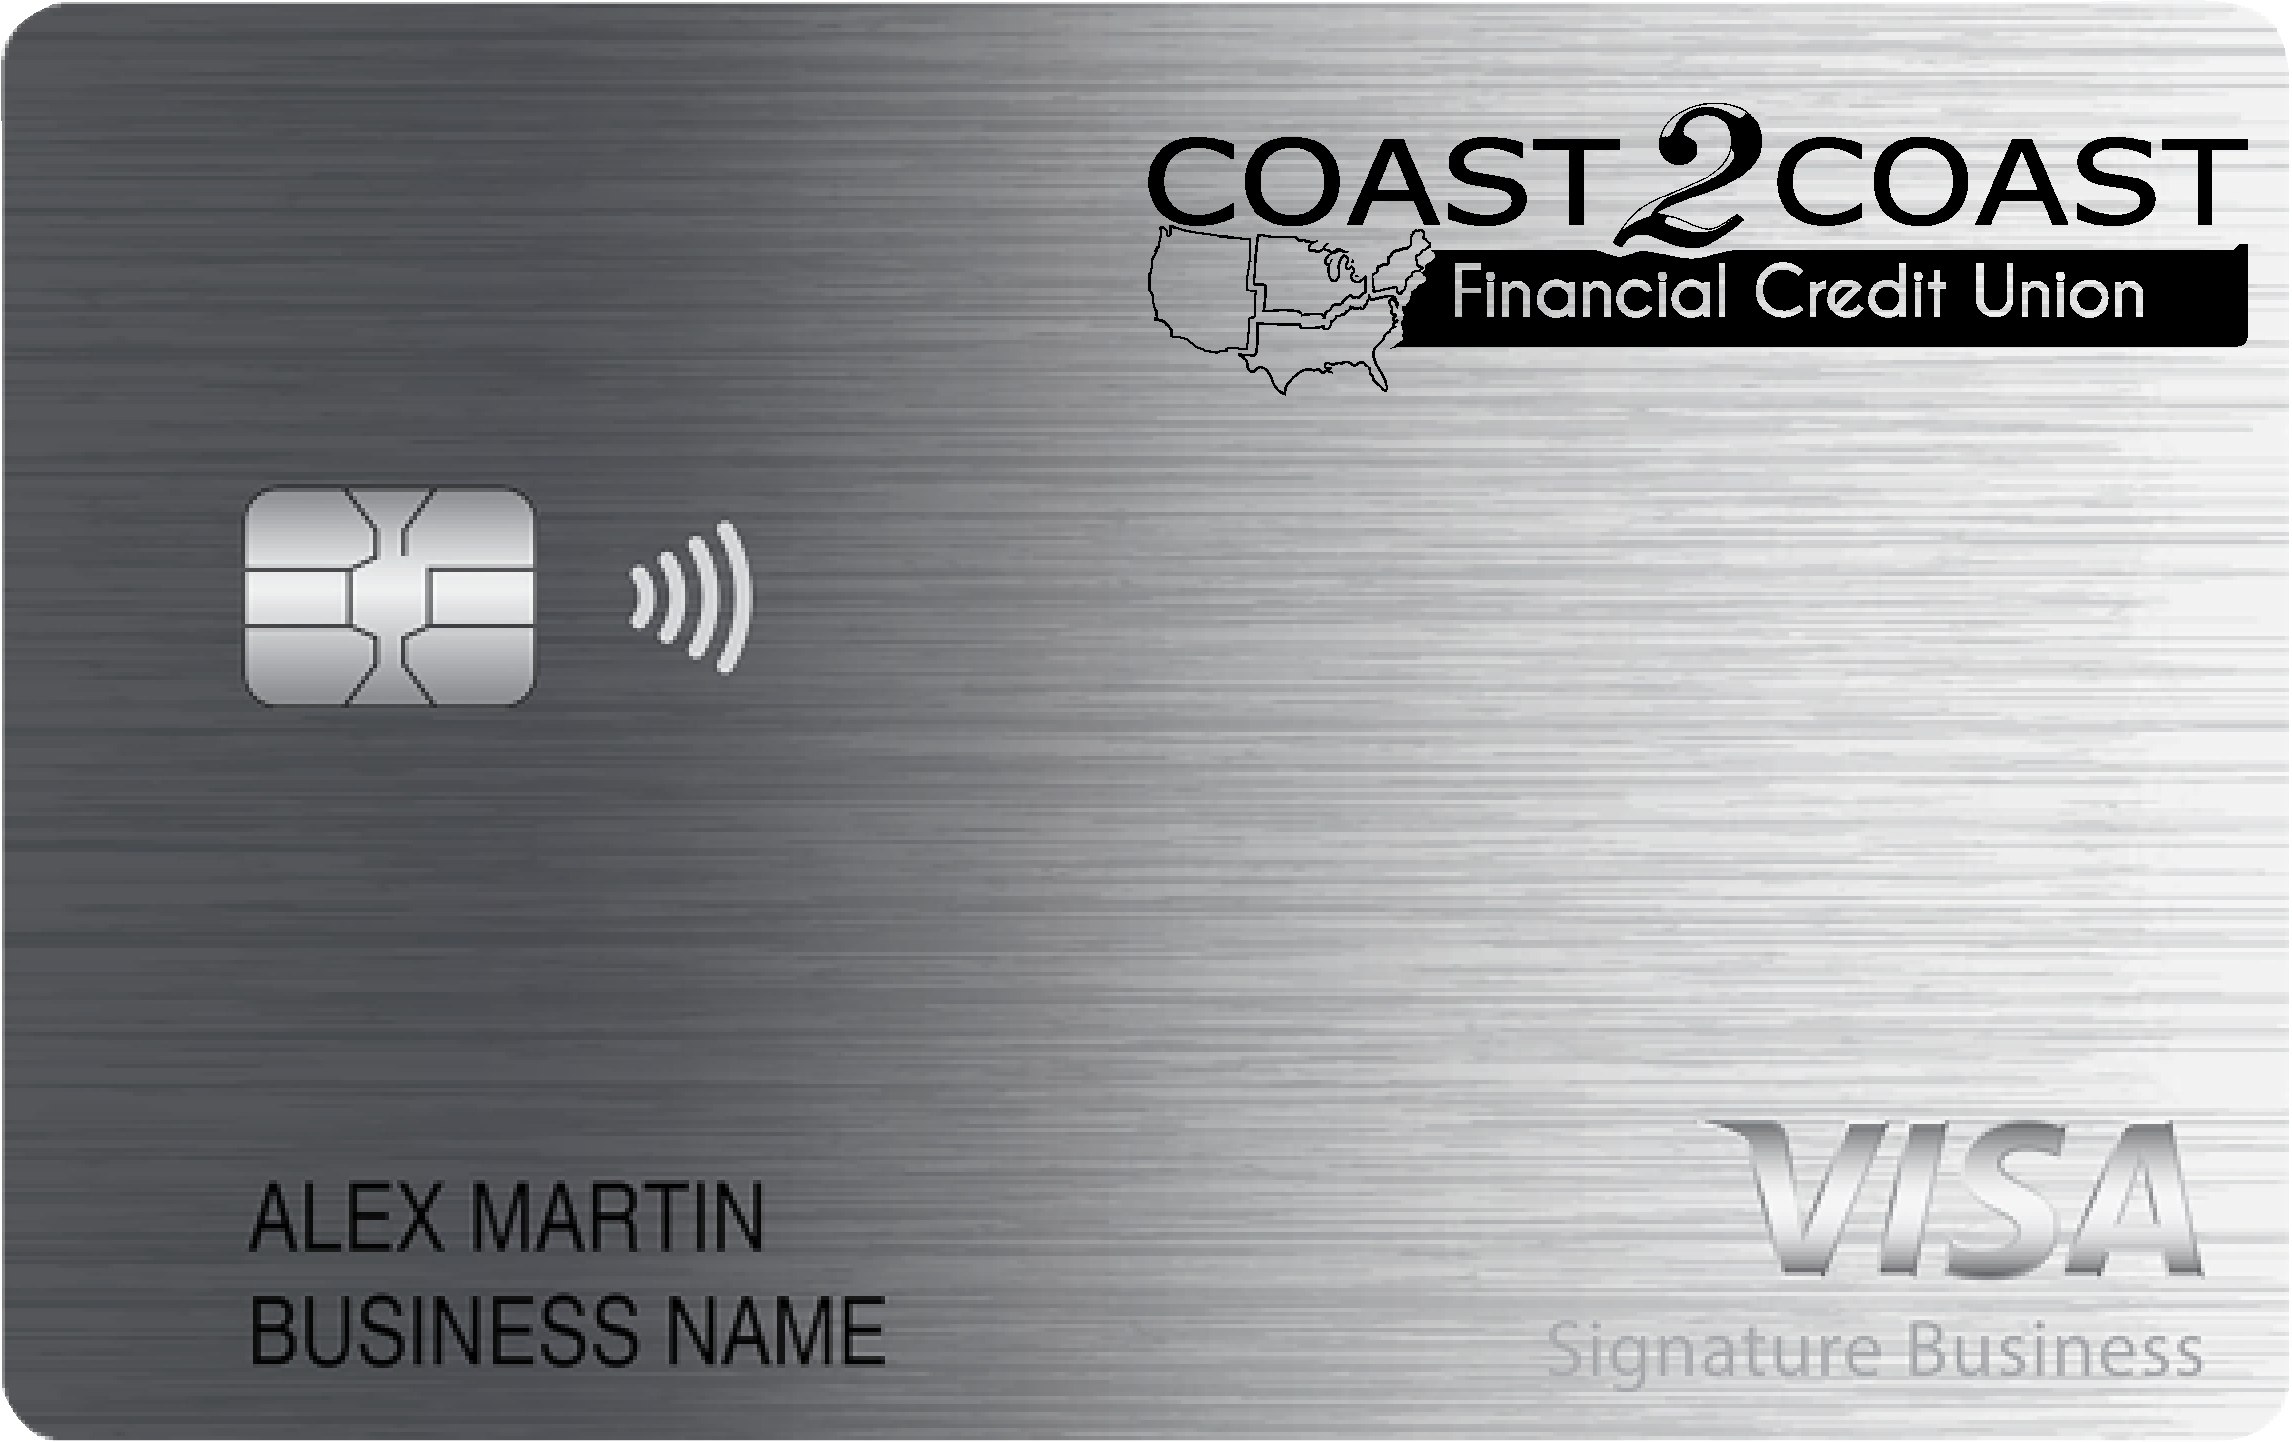 Coast 2 Coast Financial Credit Union Smart Business Rewards Card